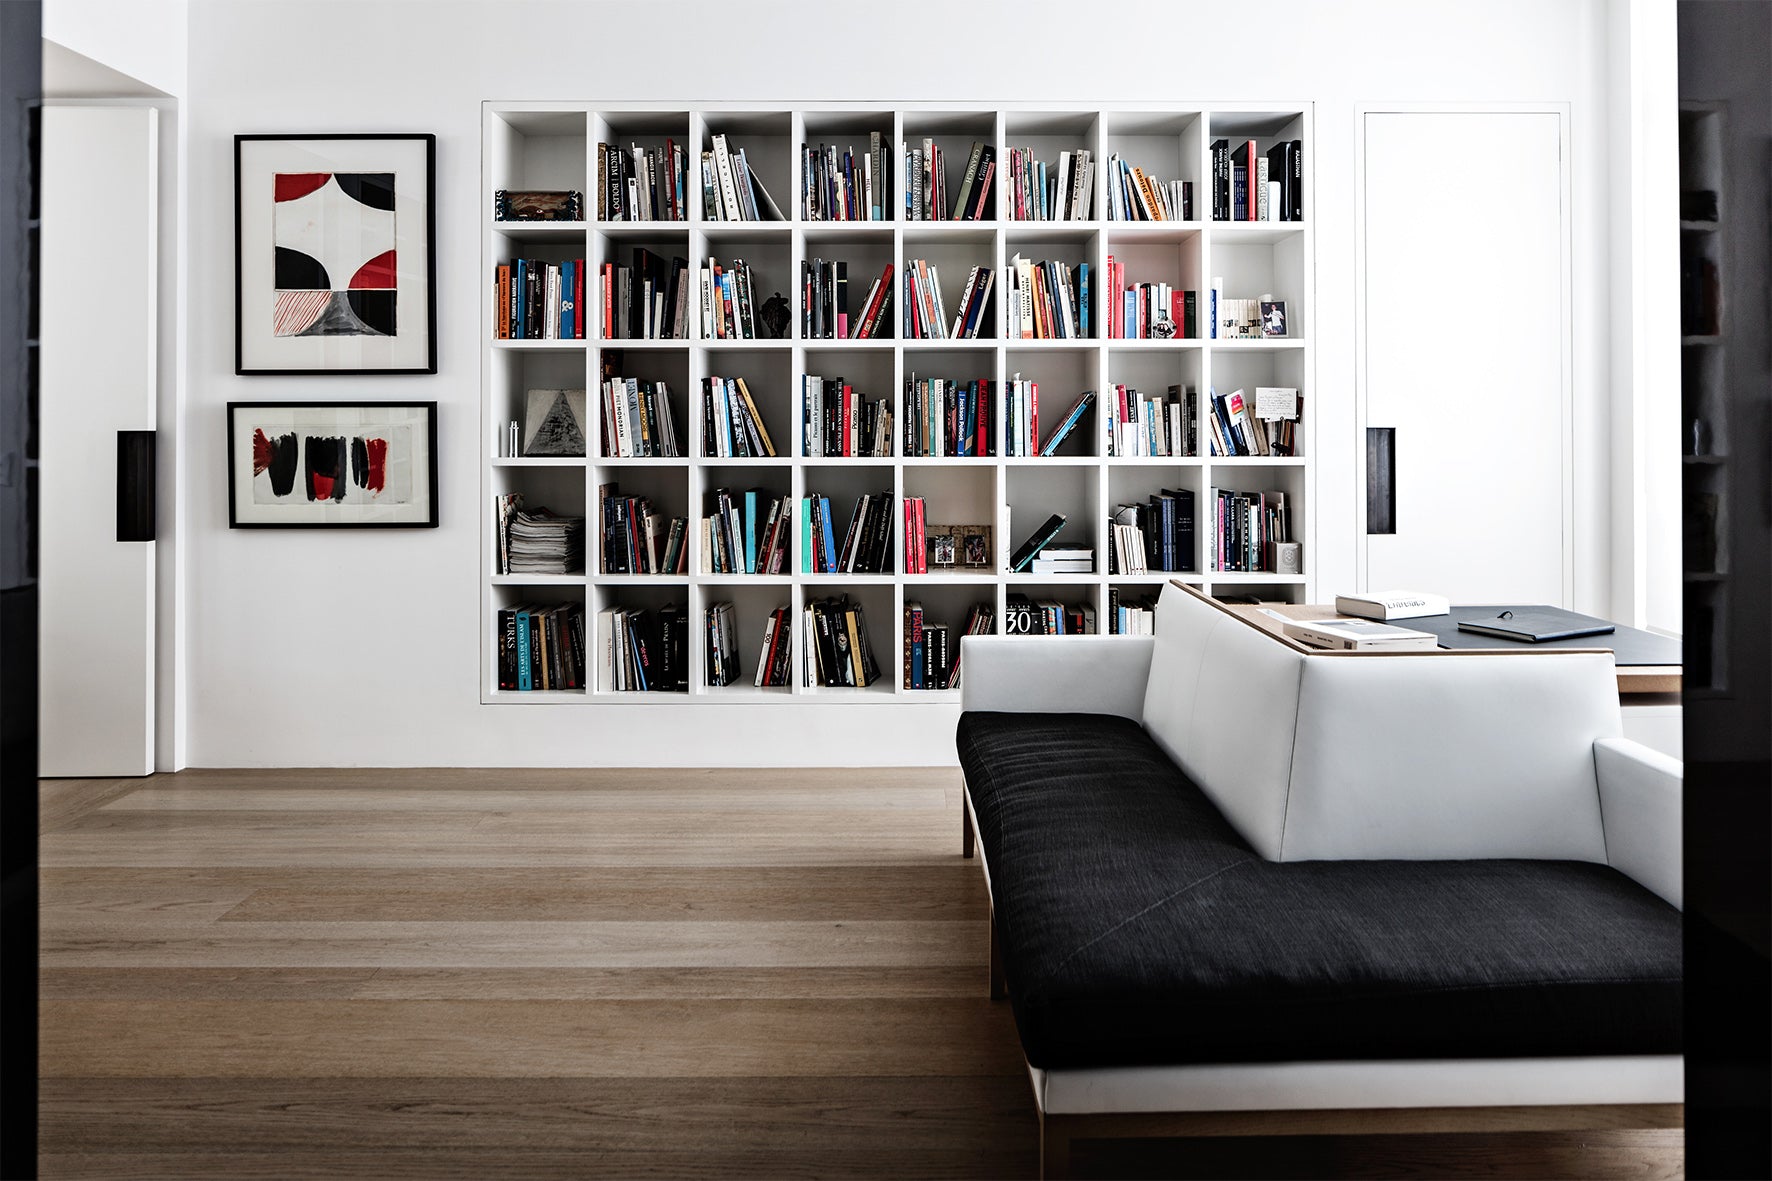 St Germain flat , Frederic Berthier:  Living room